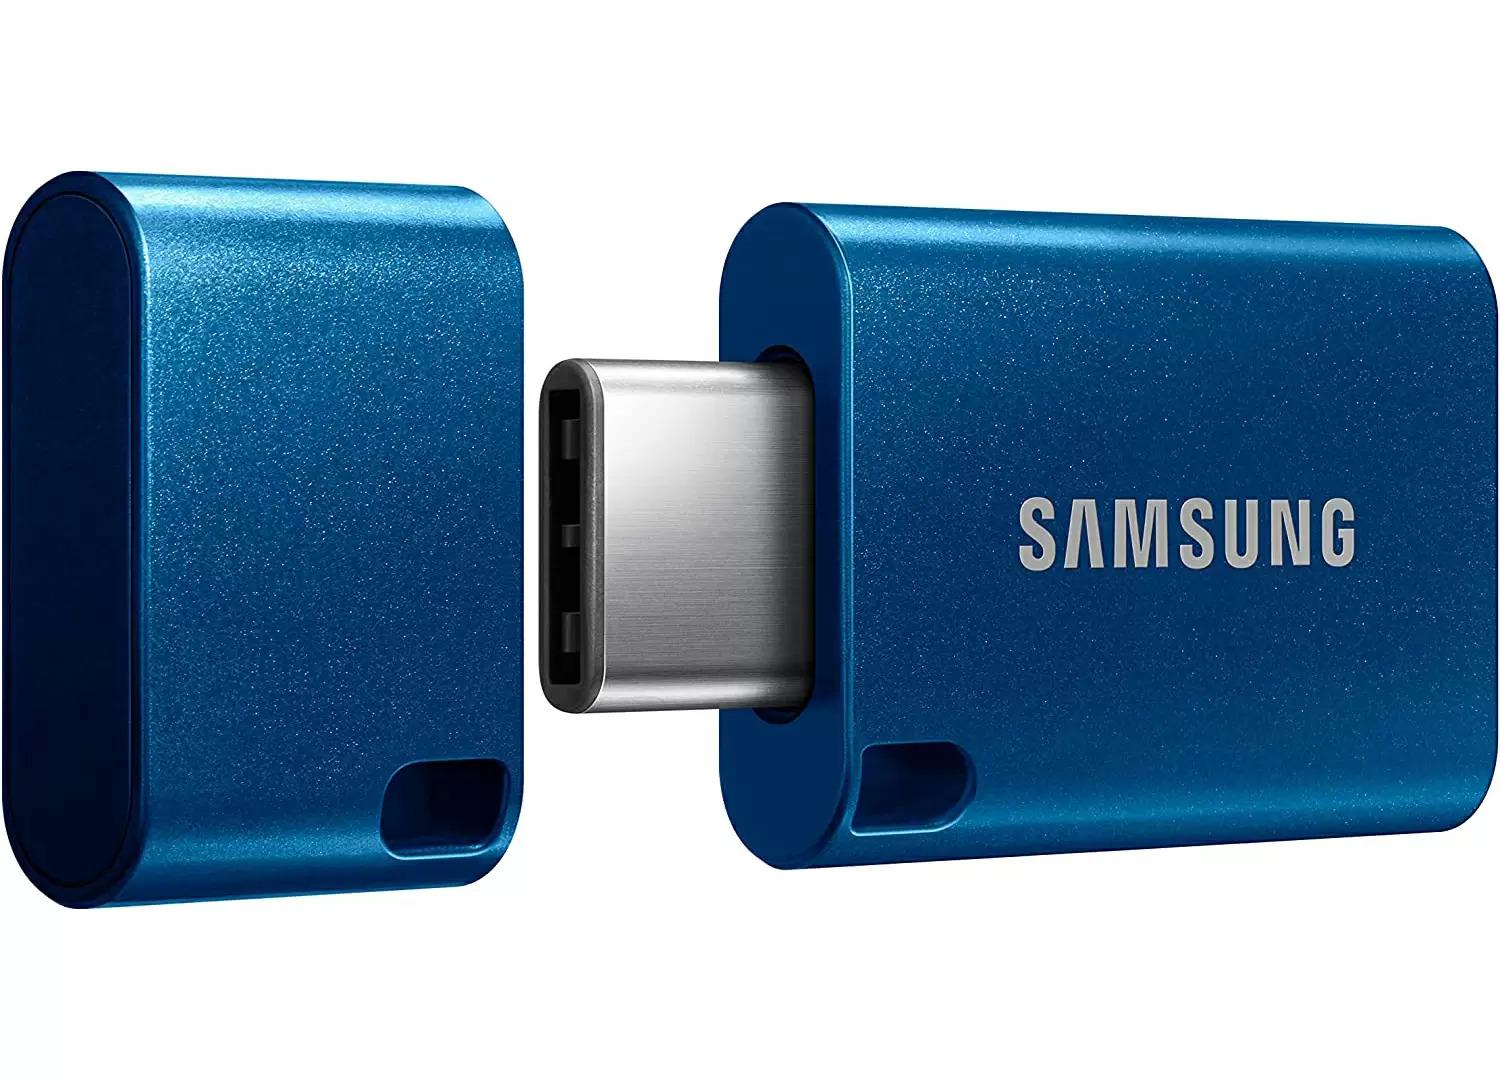 128GB Samsung Type-C USB 3.0 Waterproof Flash Drive for $15.99